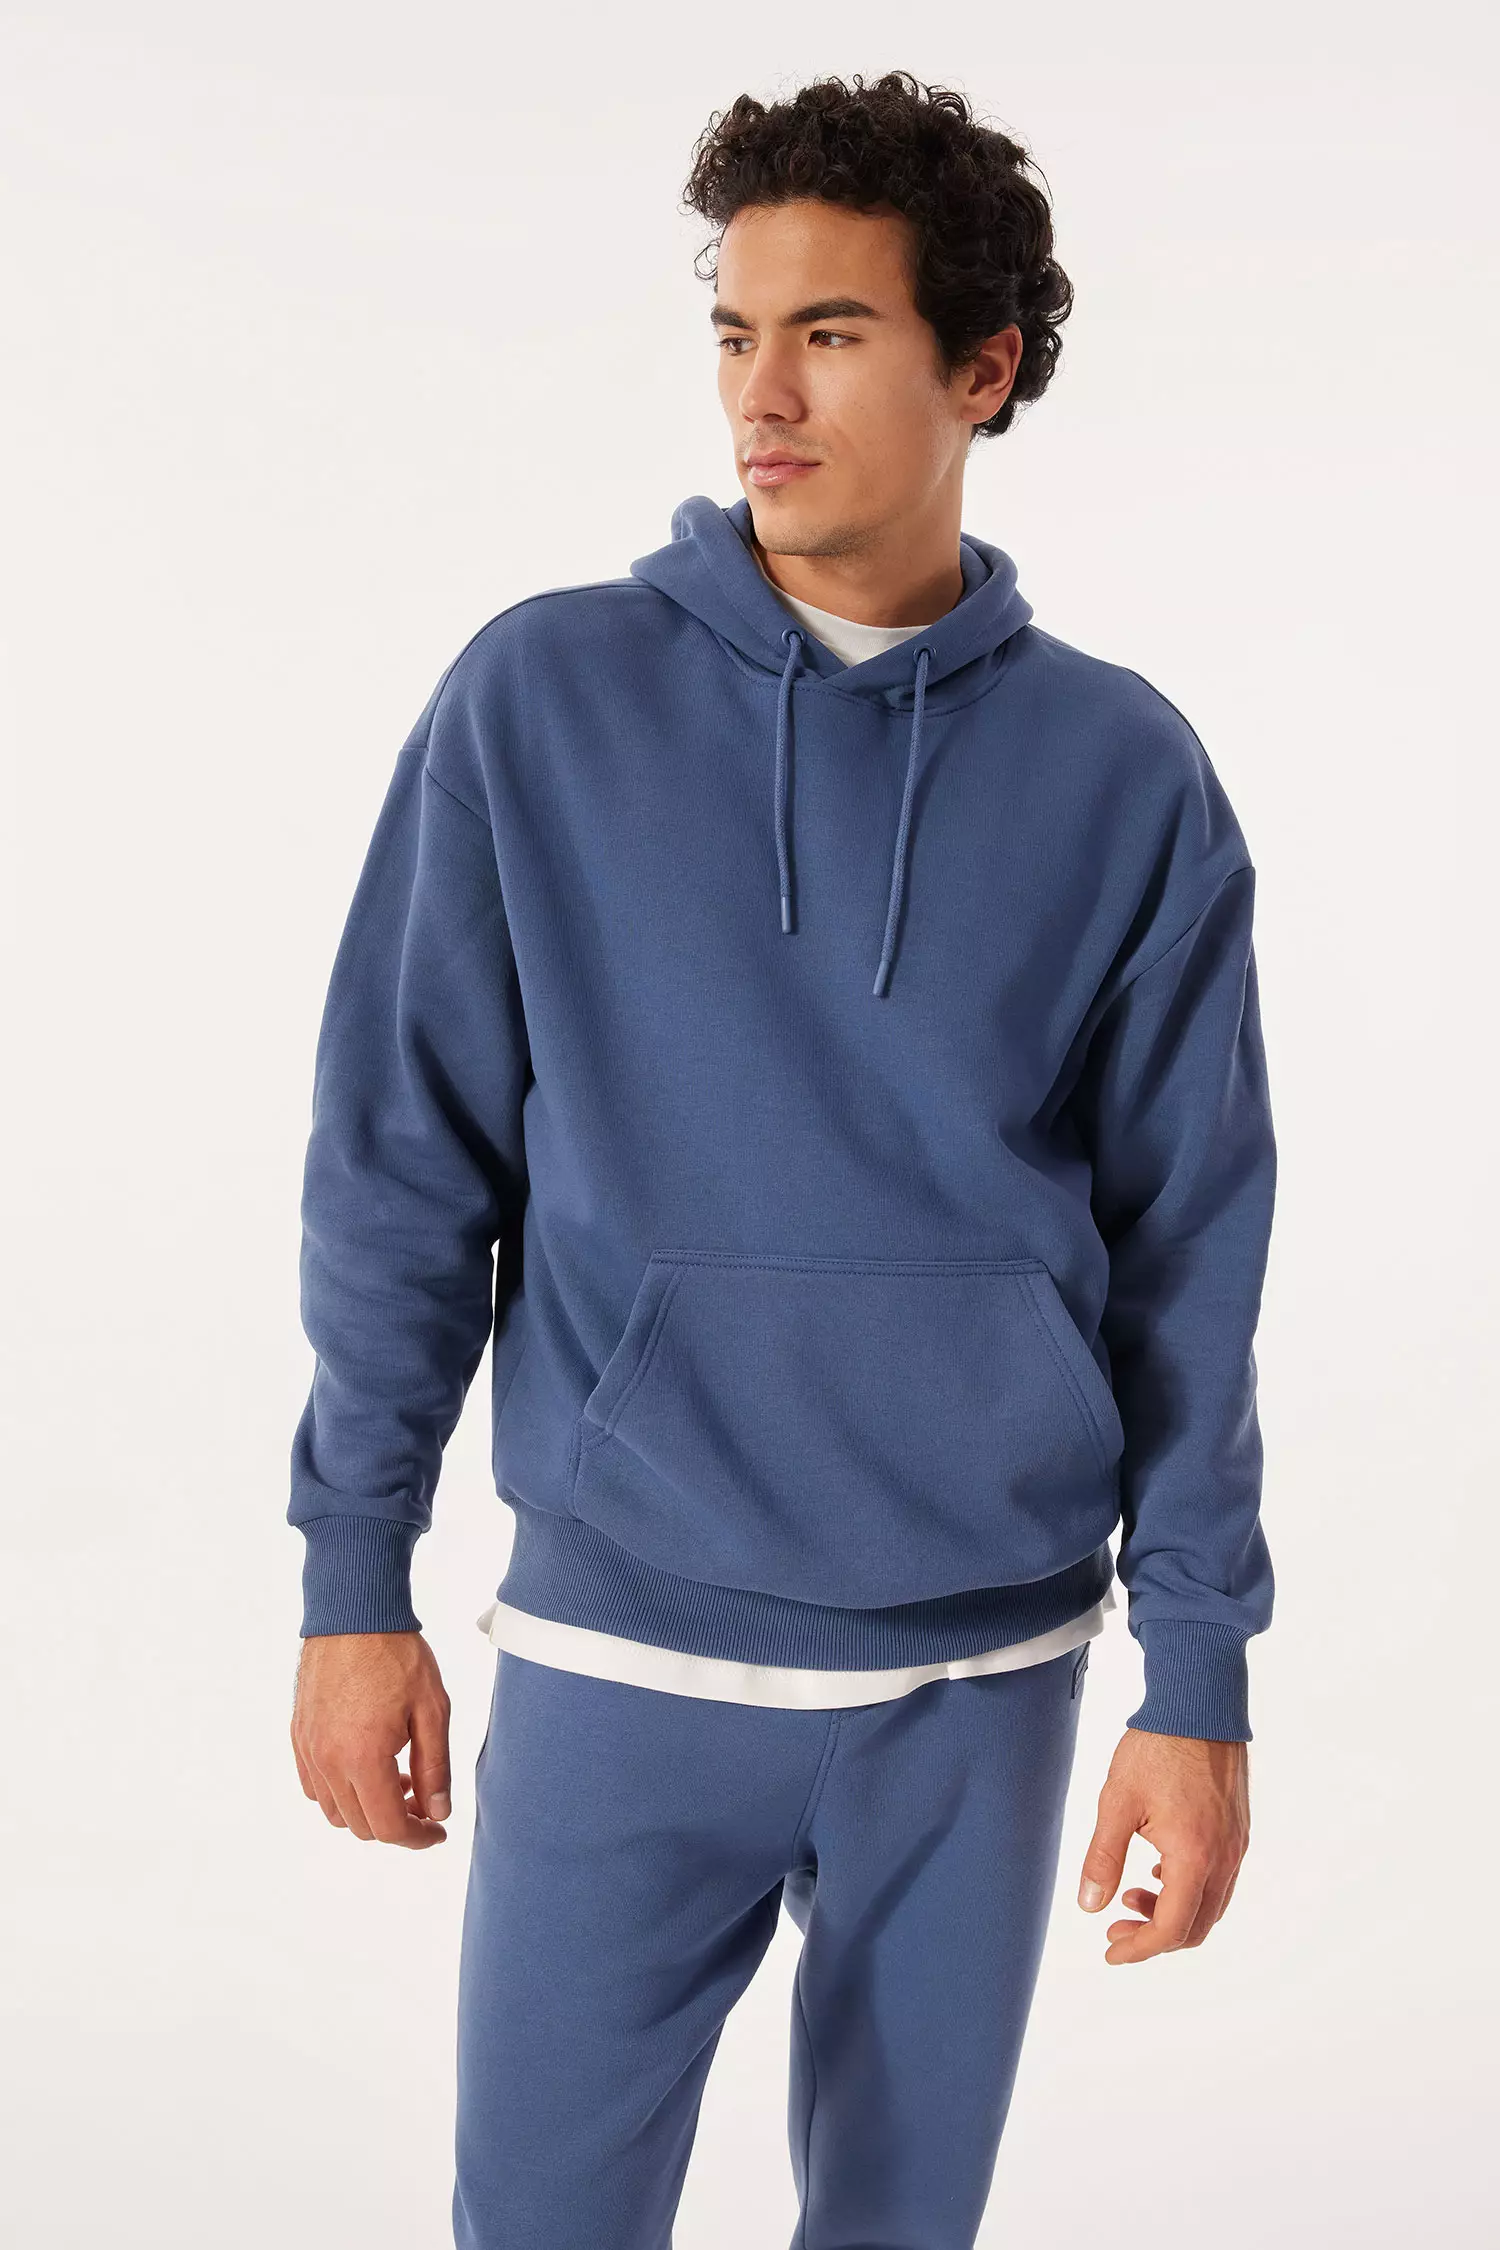 Reclaimed Vintage inspired oversized hoodie in navy overdye, ASOS